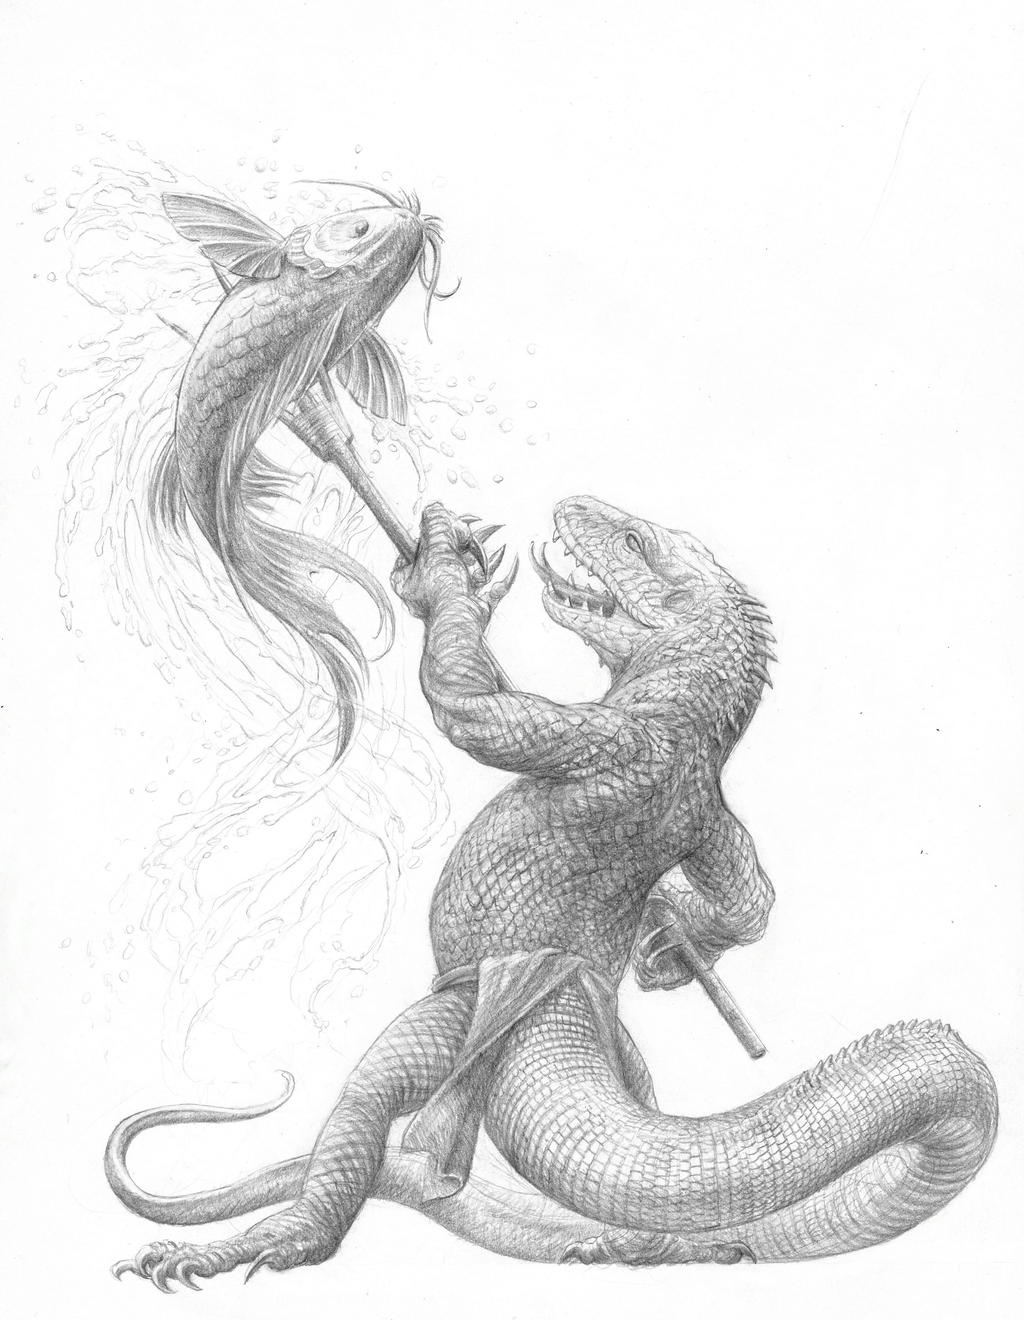 Lizard catching fish by TurnerMohan on DeviantArt